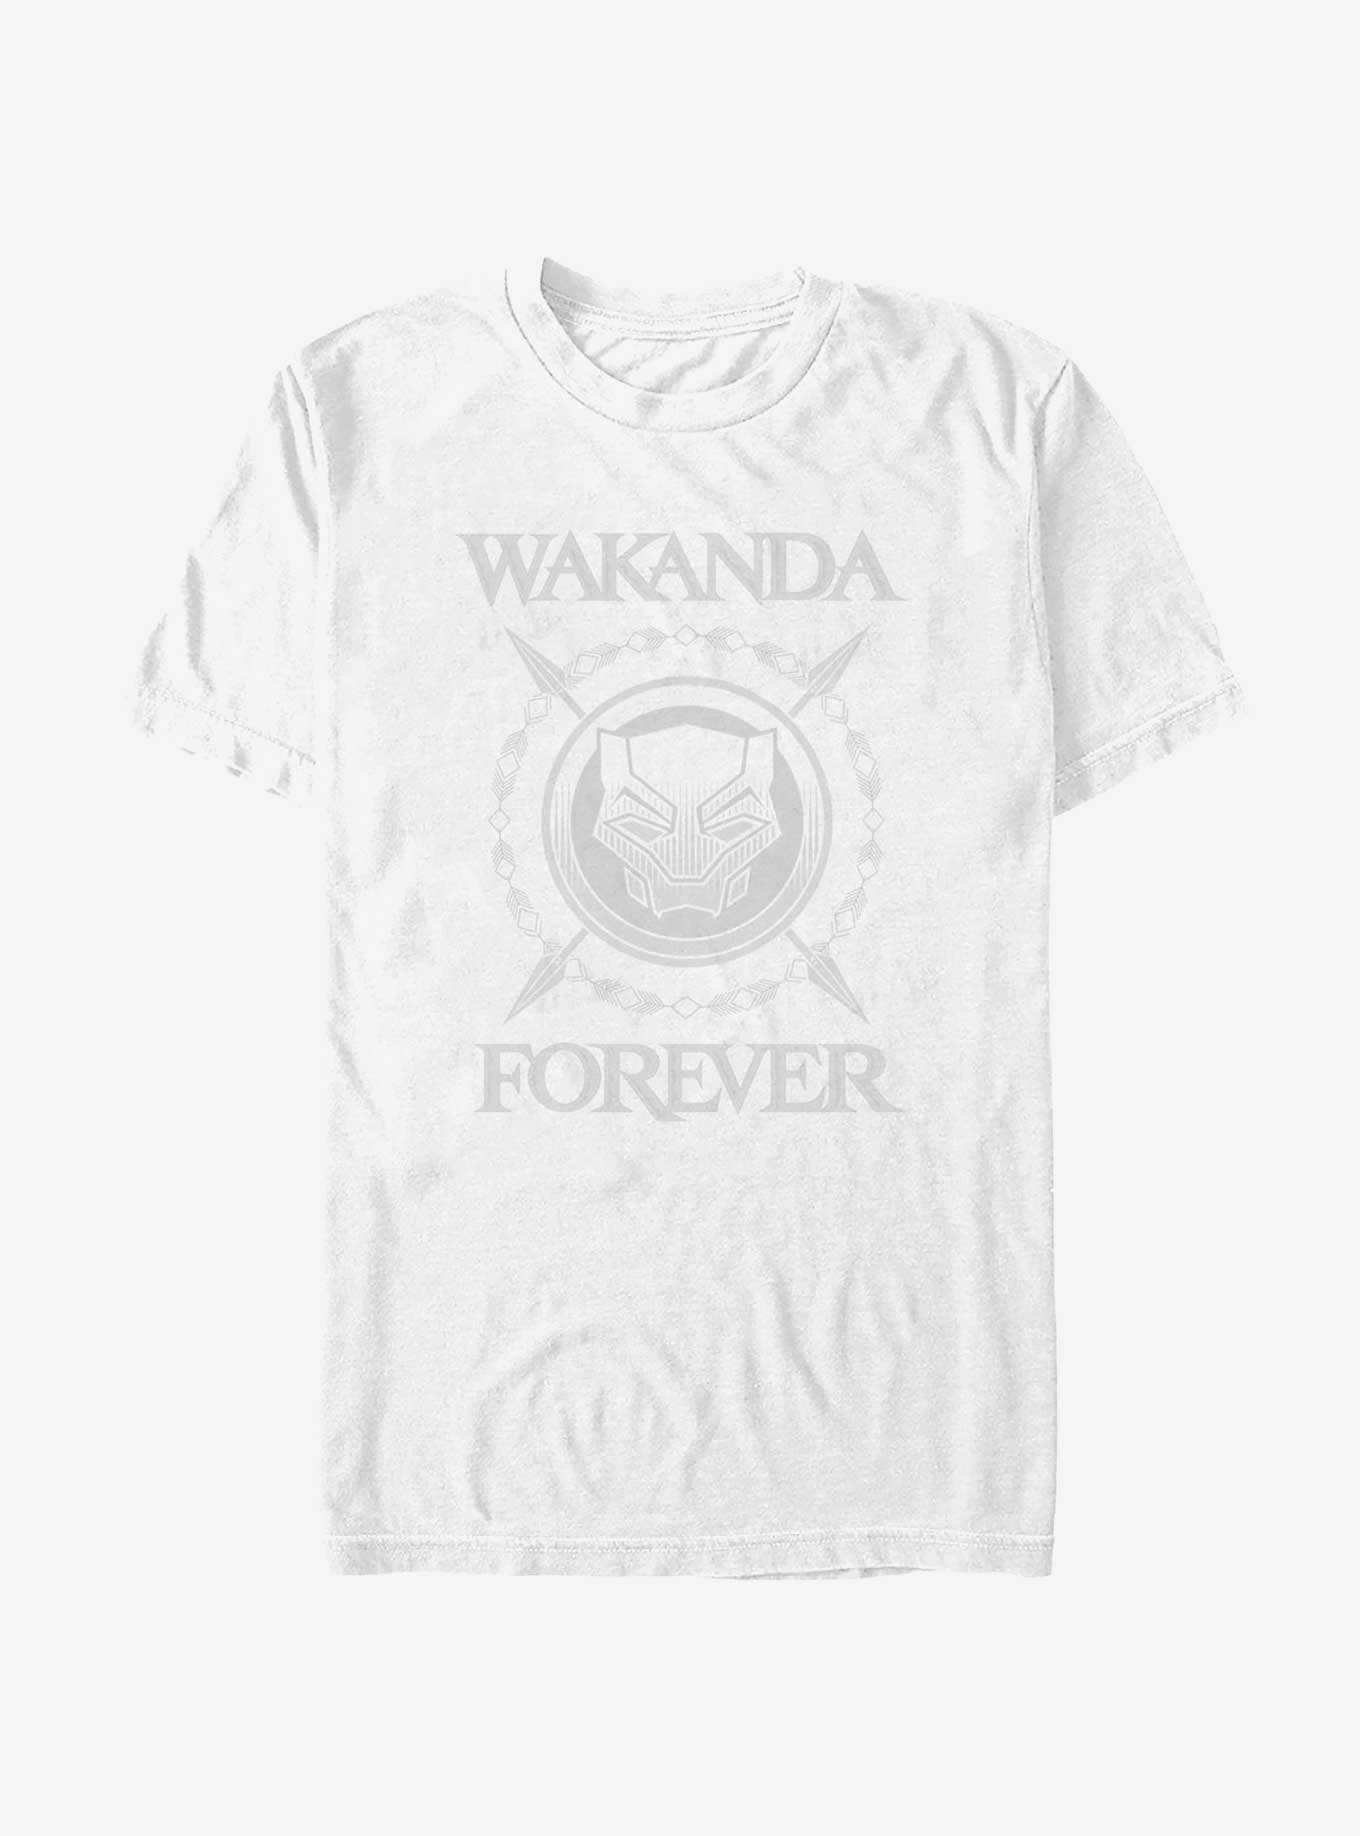 Marvel Black Panther: Wakanda Forever Crossed Spears Emblem Extra Soft T-Shirt, , hi-res